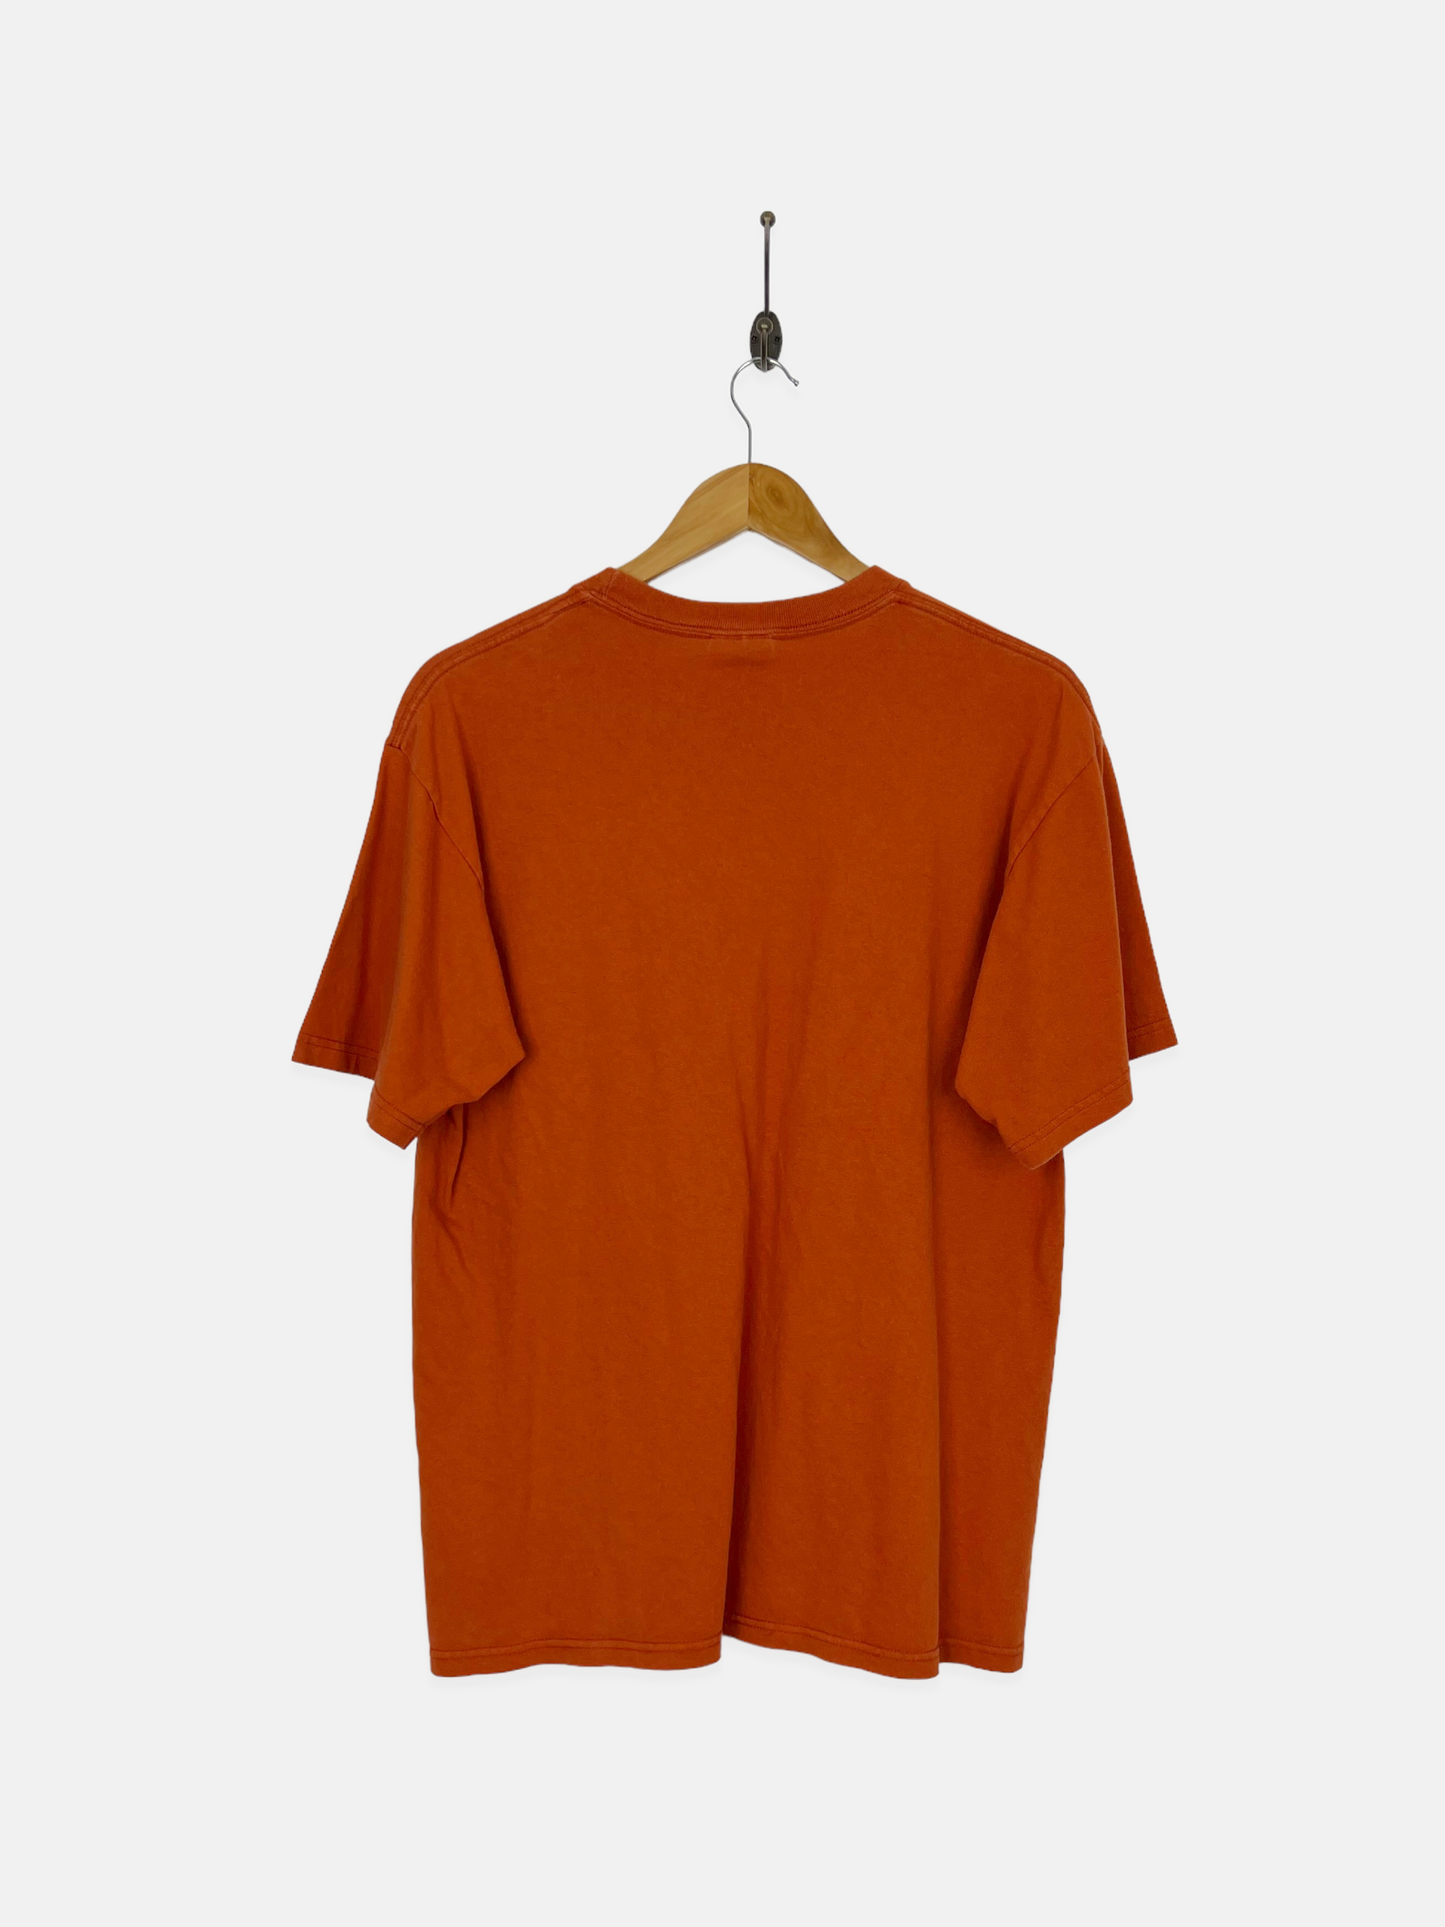 Nike Texas Longhorns Vintage T-Shirt Size 12-14